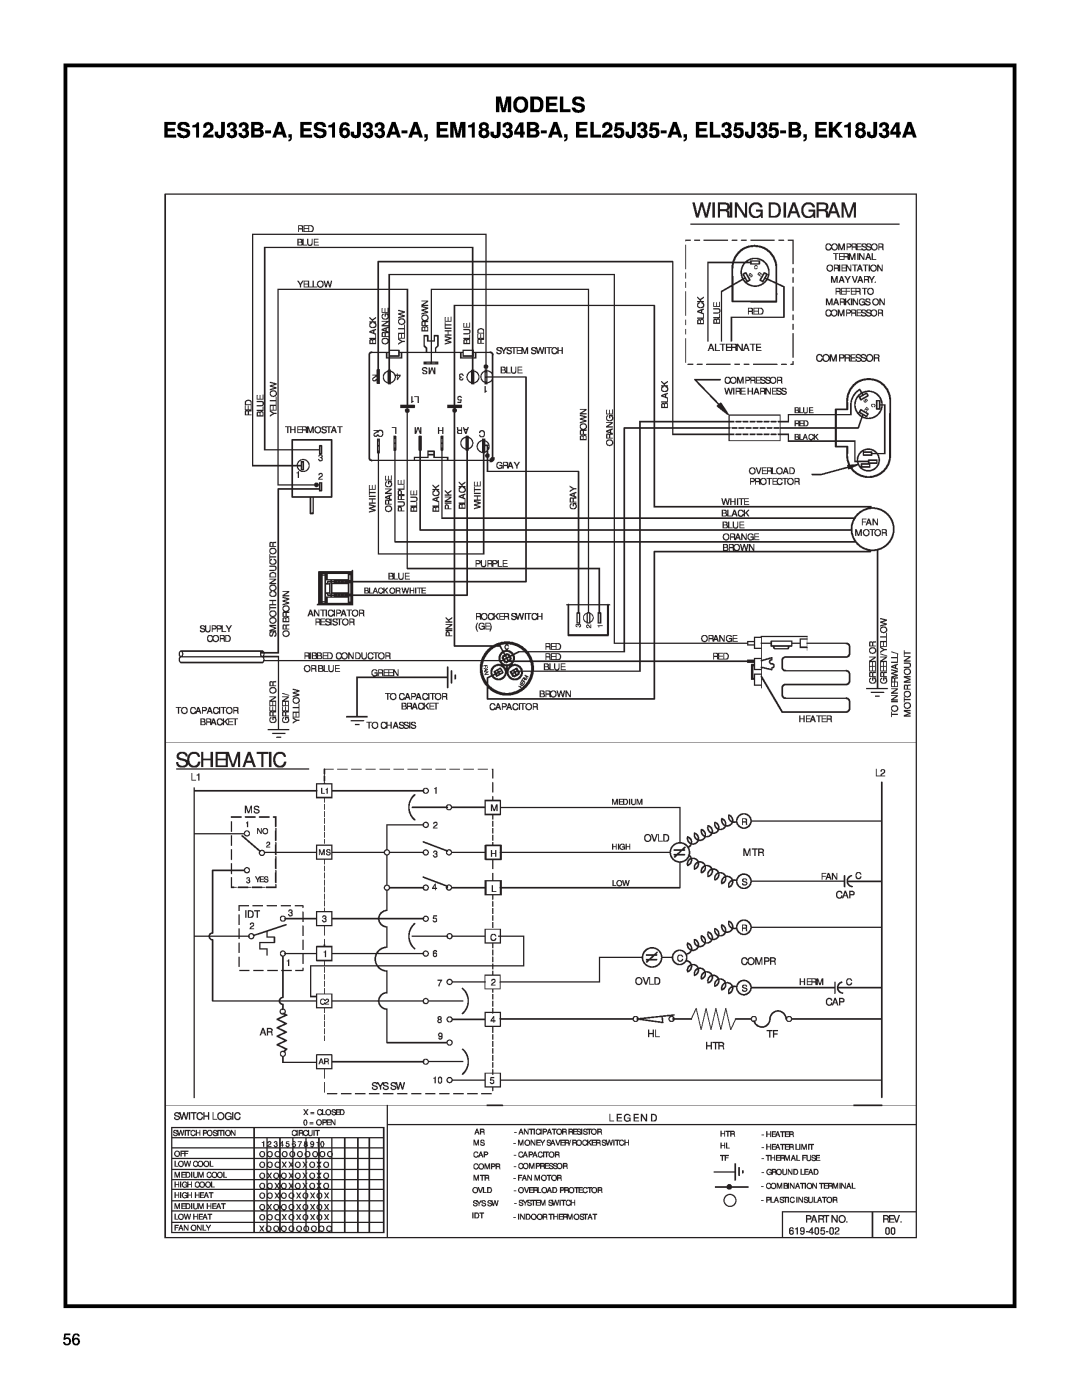 Friedrich 2003 service manual Wiring Diagram, Schematic, Models 